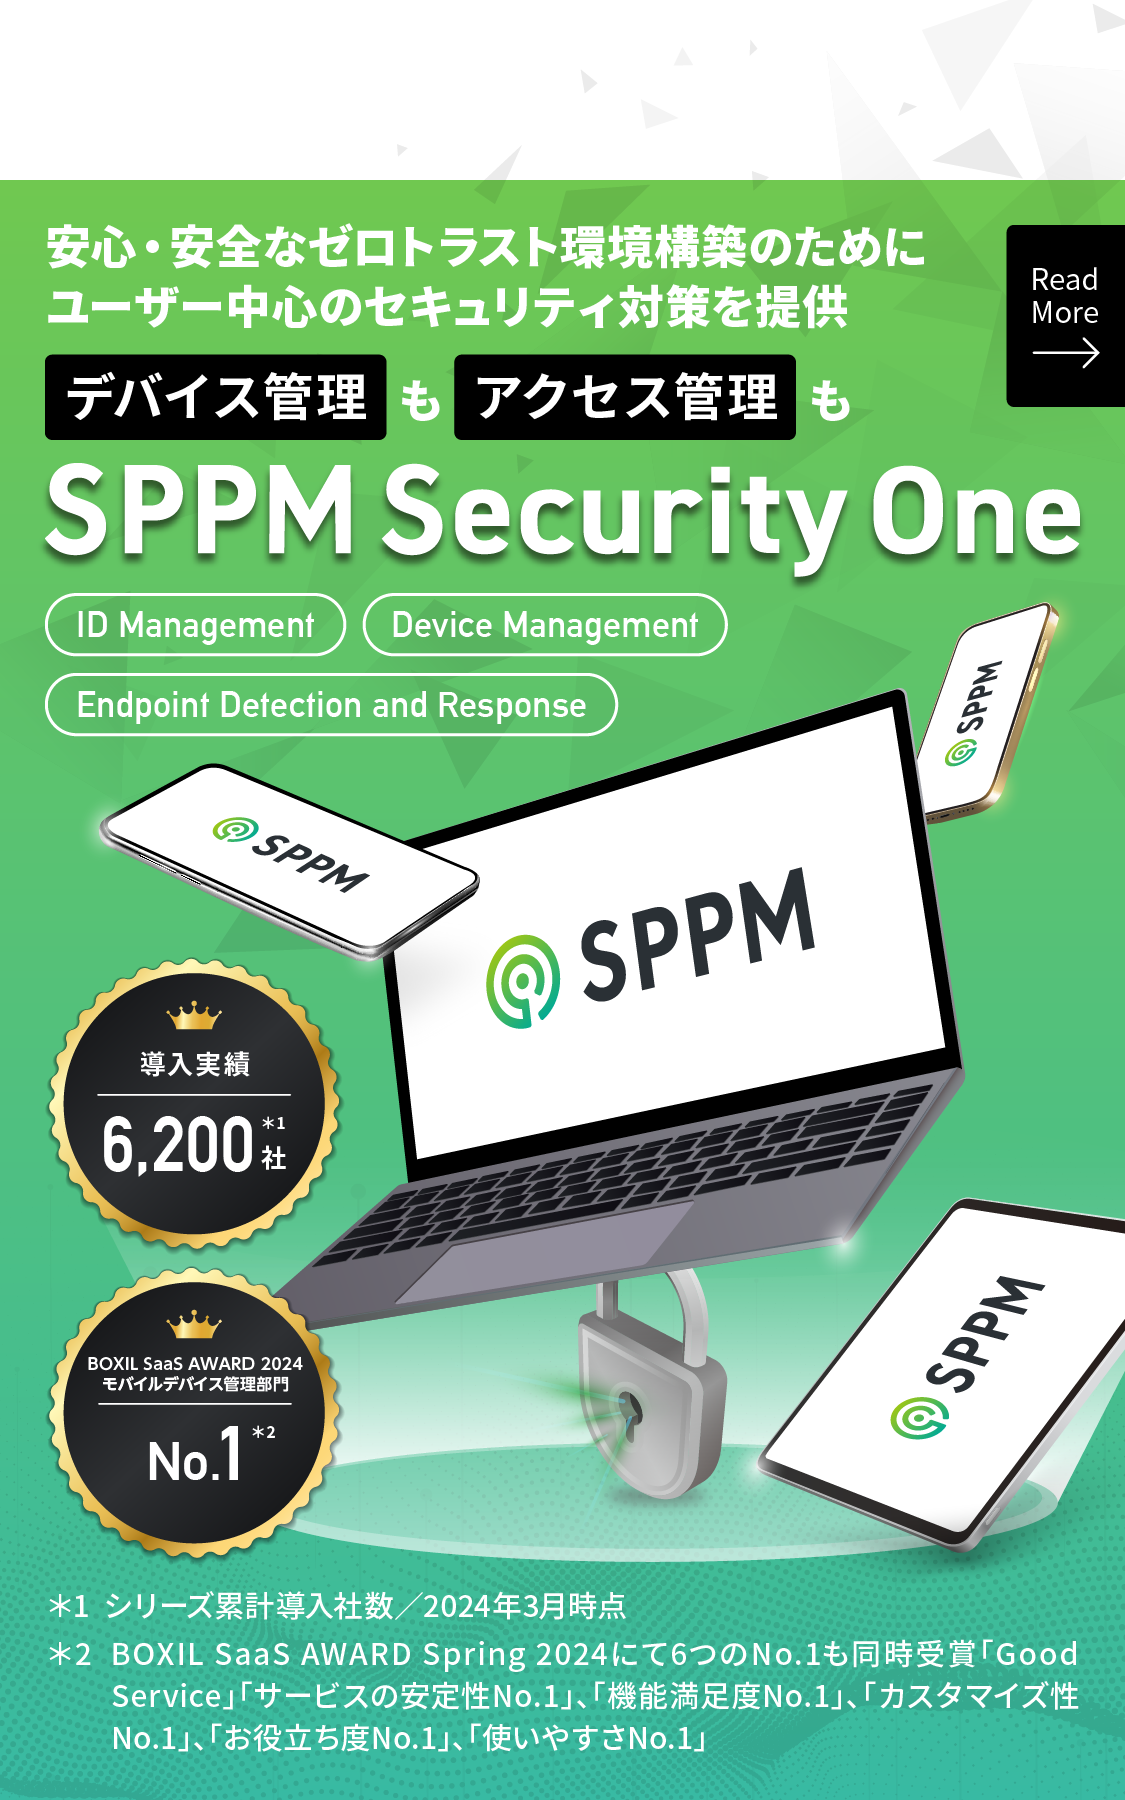 SPPMは紛失・盗難時の情報漏えい対策と端末管理の効率化を支えるクラウドサービス　PCもスマホもこれ一つで安心